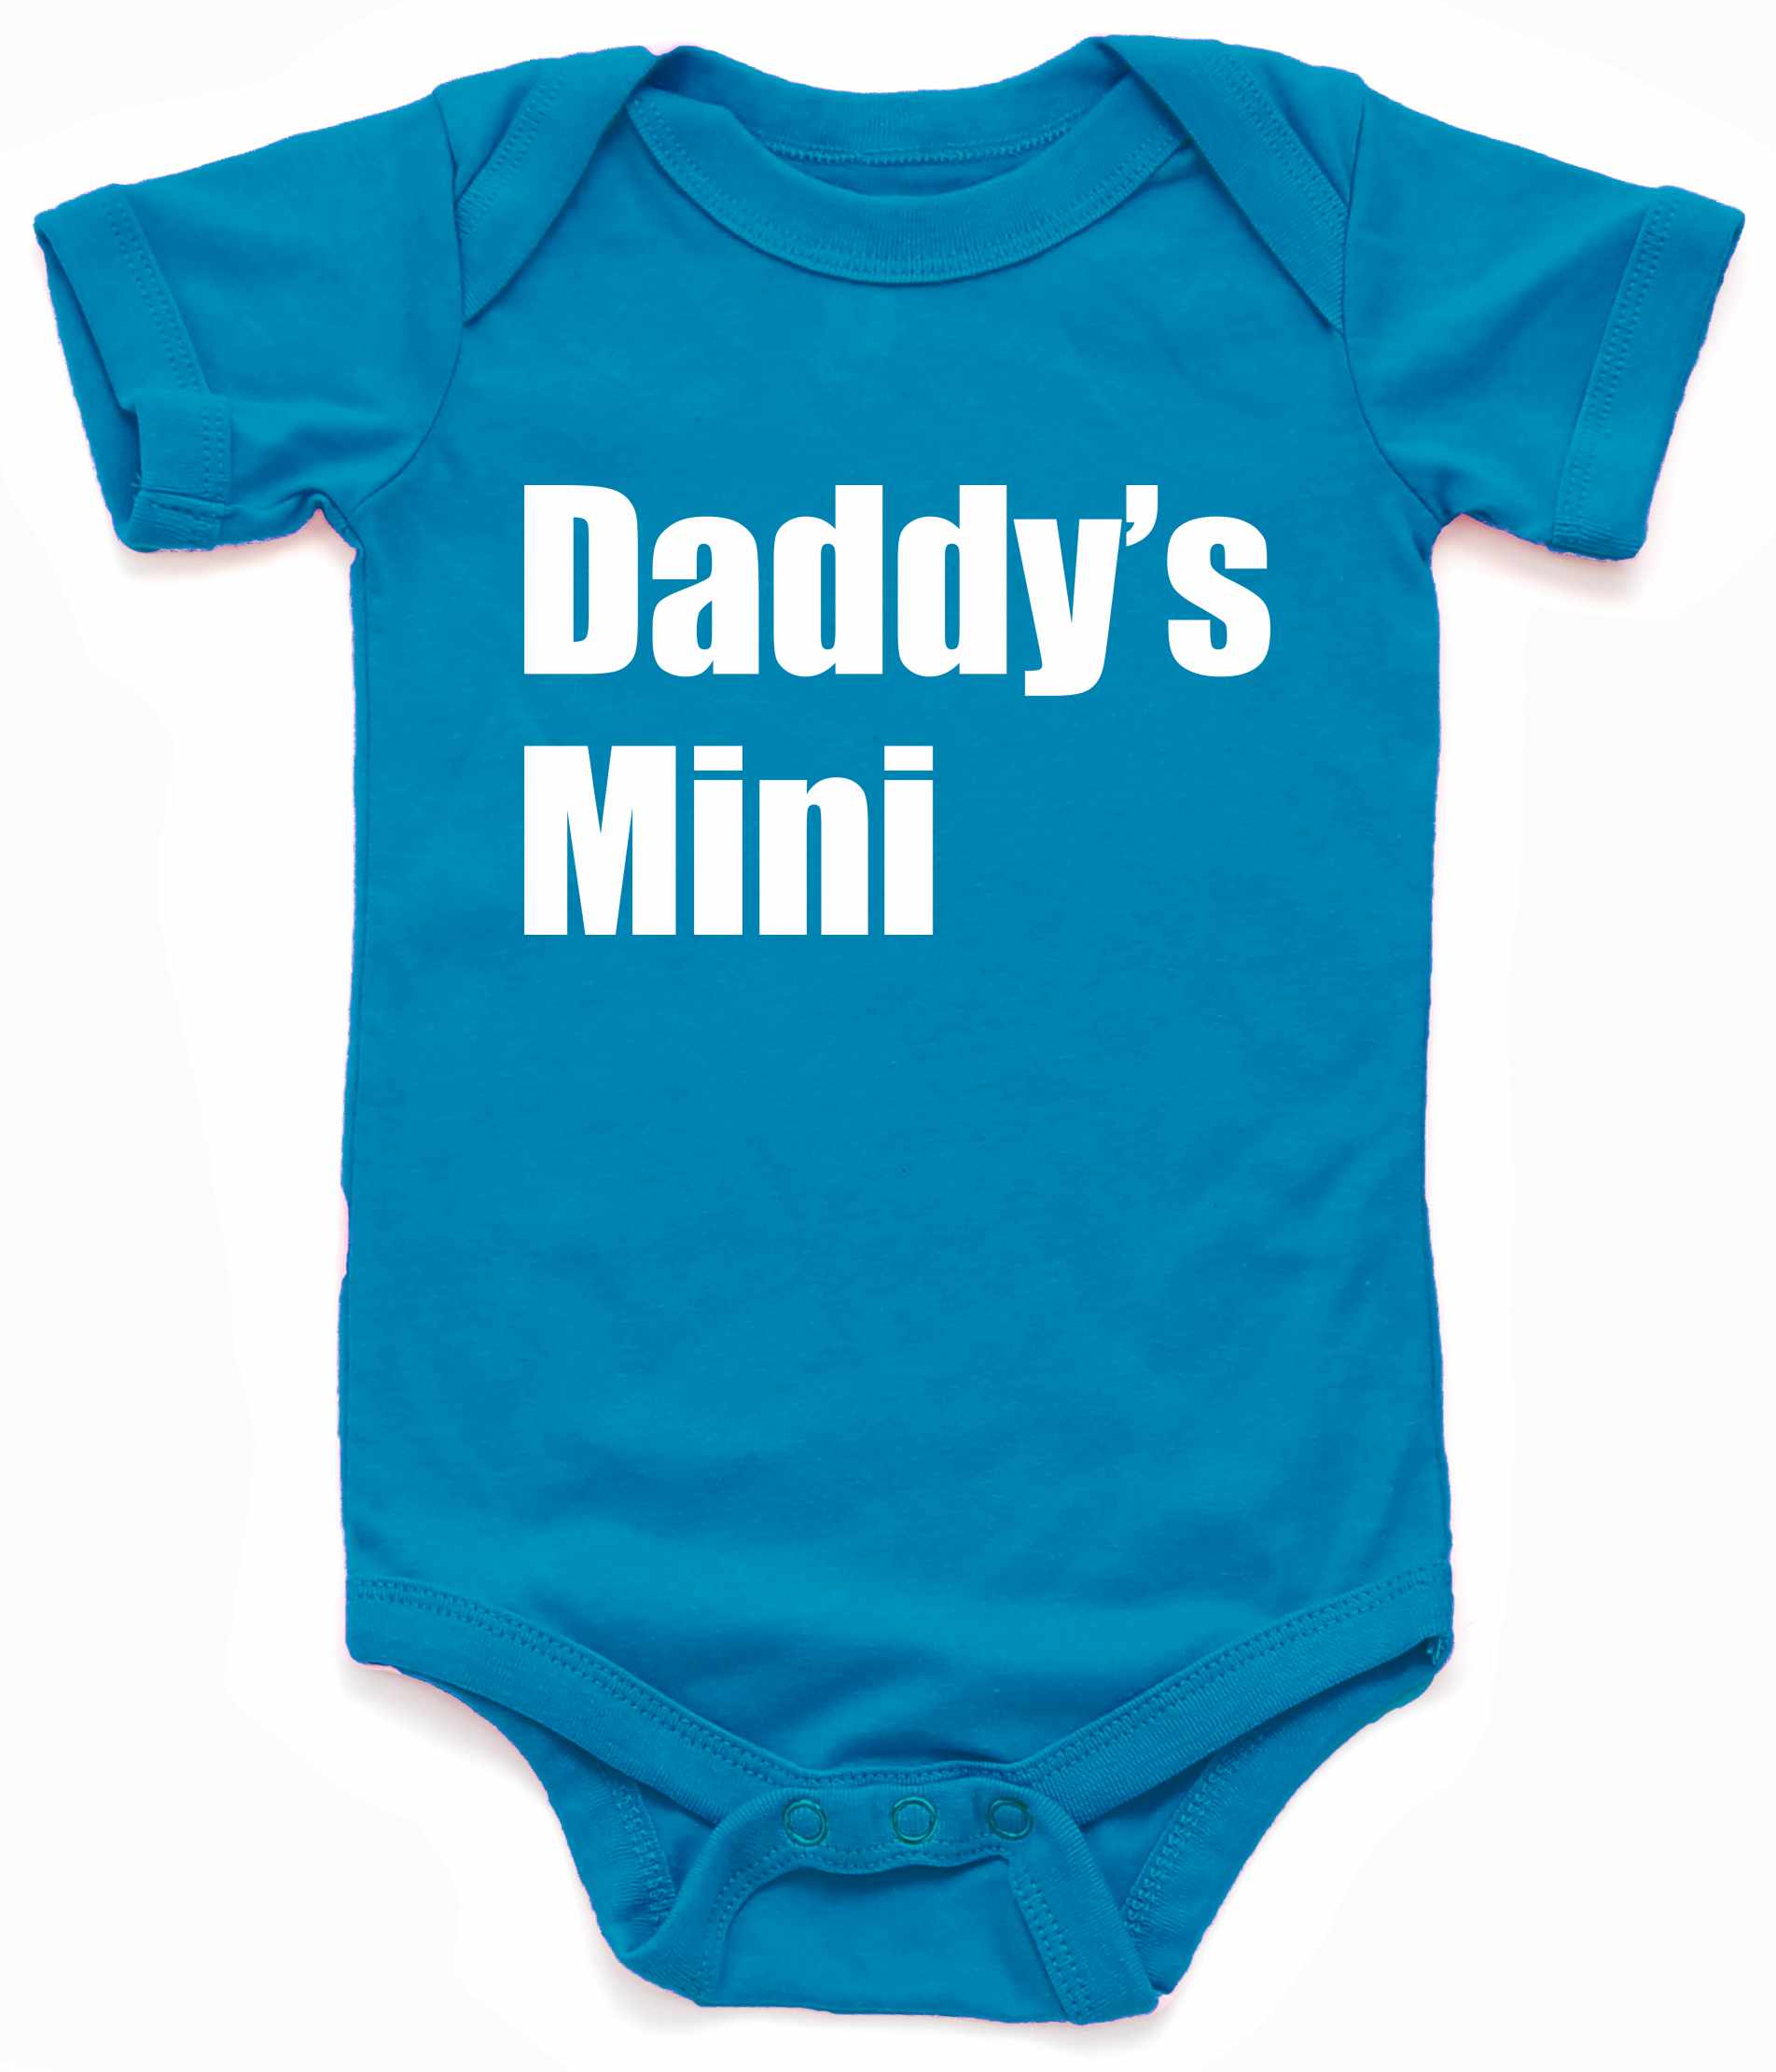 Daddy's Mini Infant BodySuit - Turquoise / NewBorn - Turquoise / 6 Month - Turquoise / 12 Month - Turquoise / 18 Month - Turquoise / 24 Month